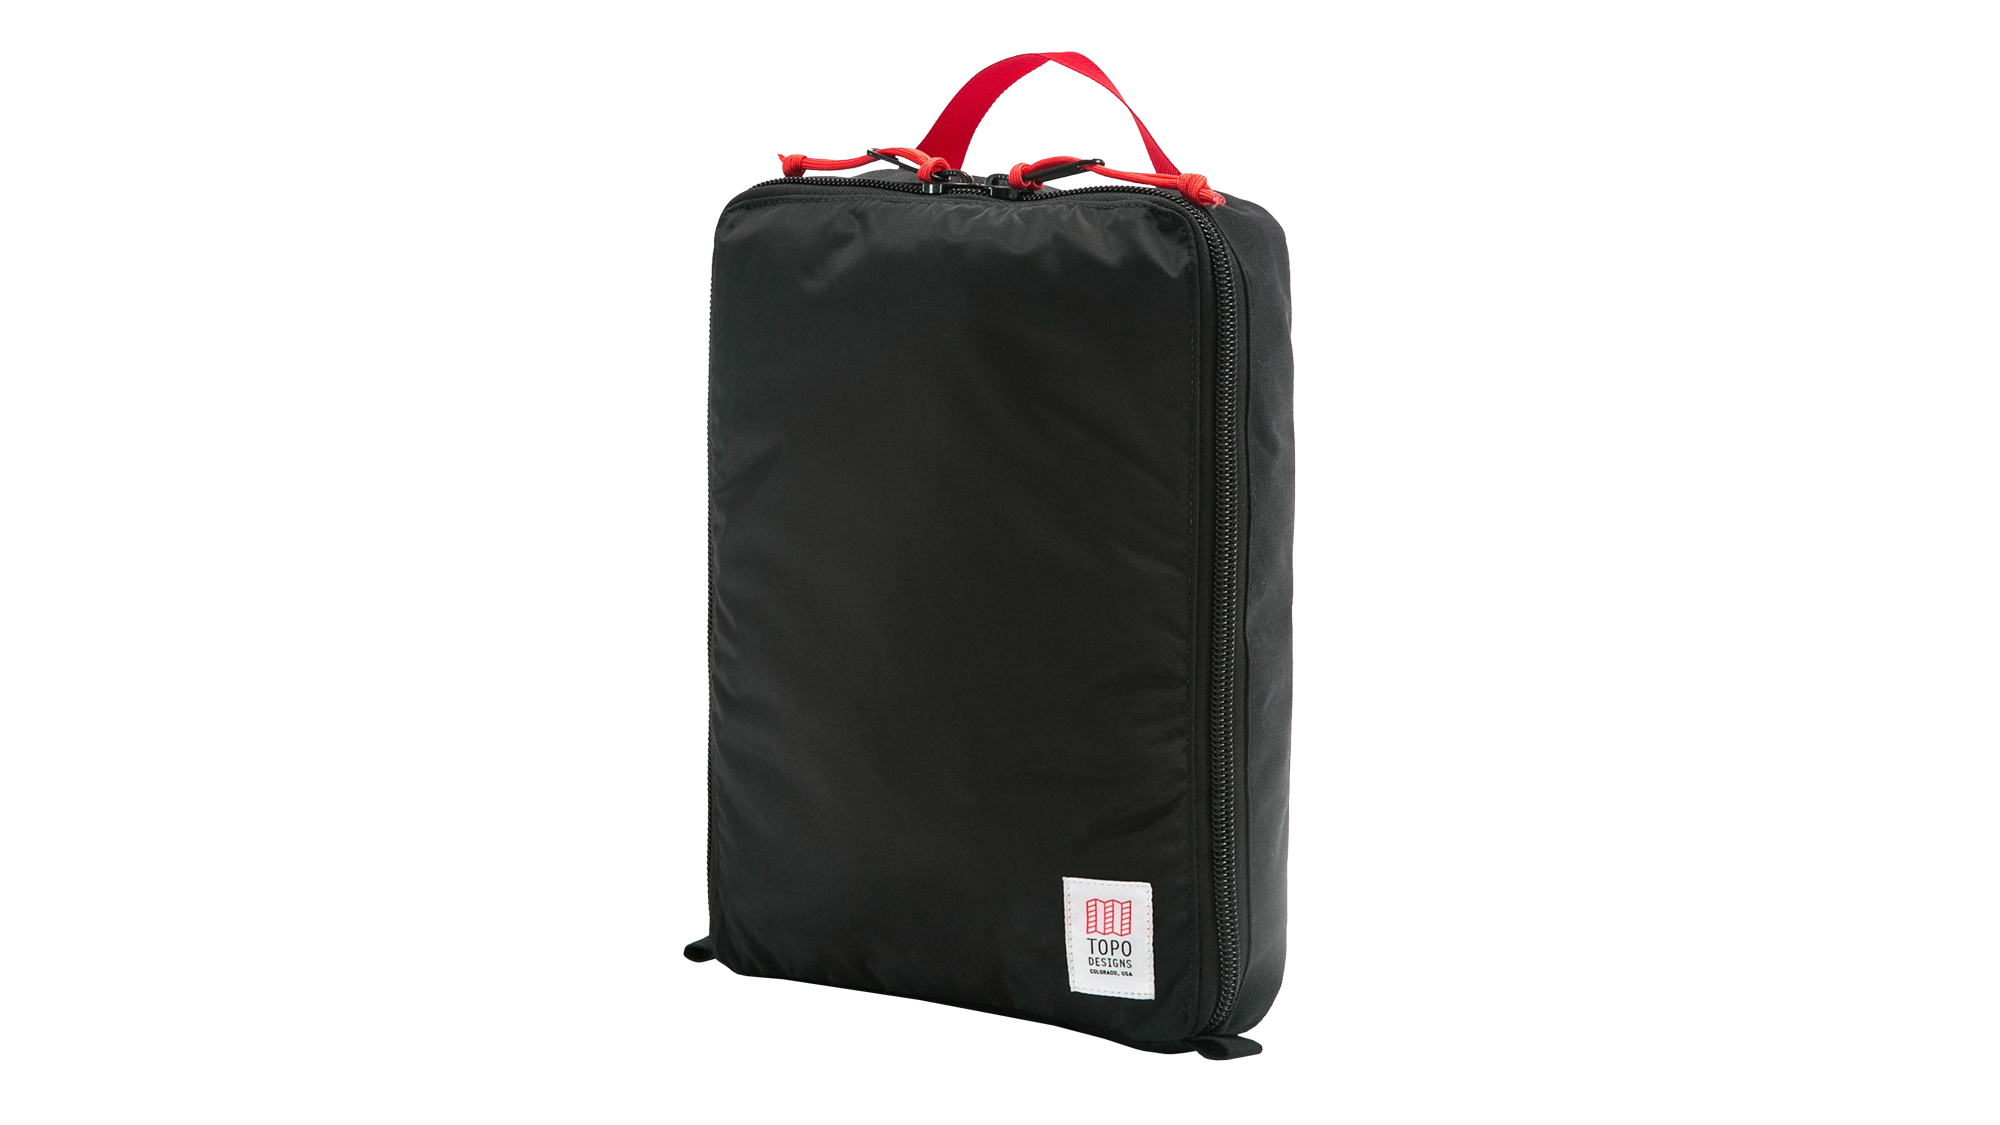 Topo Designs - Pack Bag